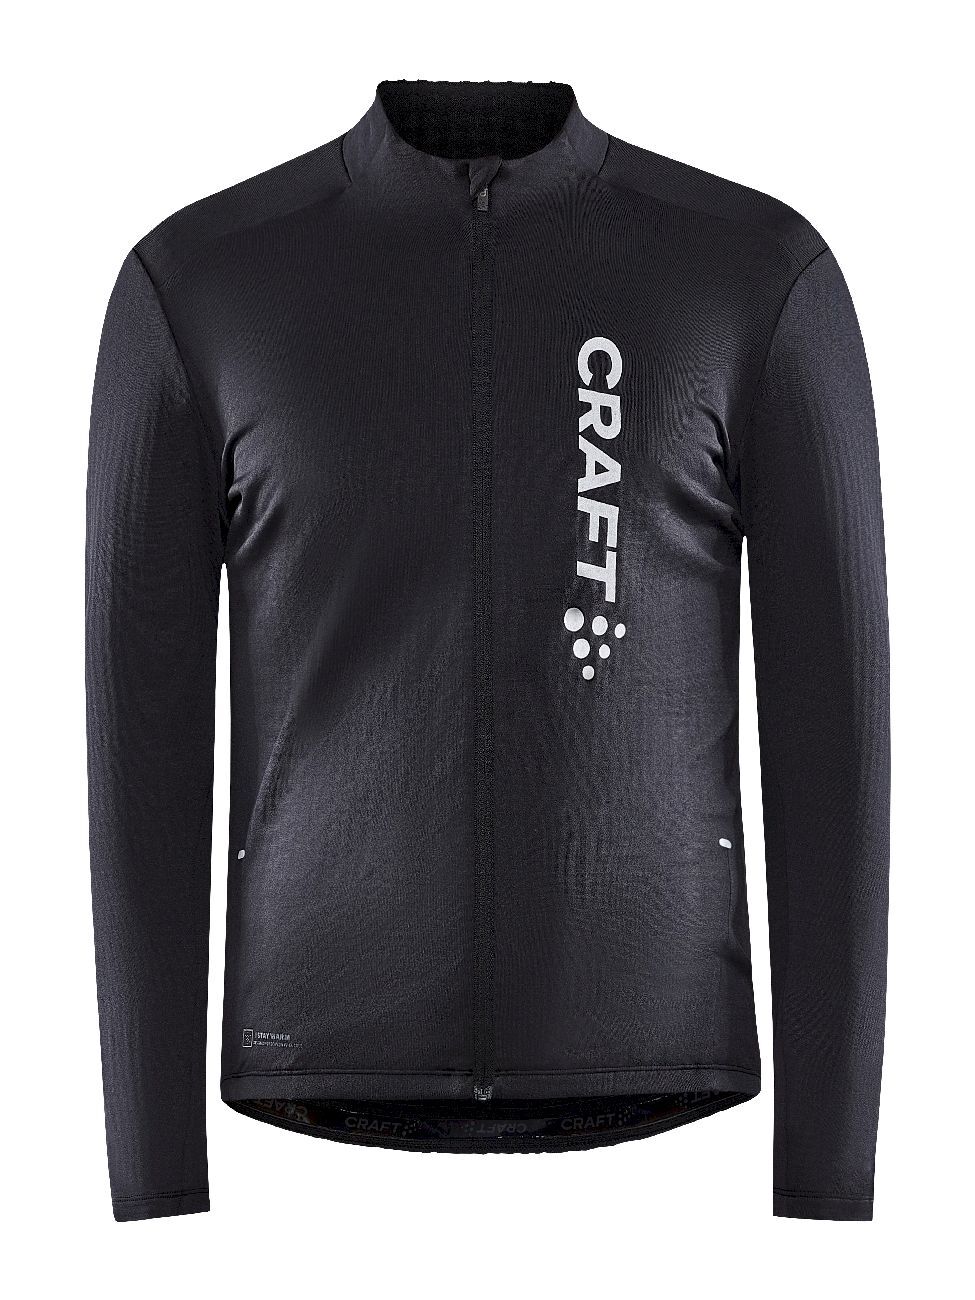 Craft Core Bike SubZ LS Jersey - Cycling jersey - Men's